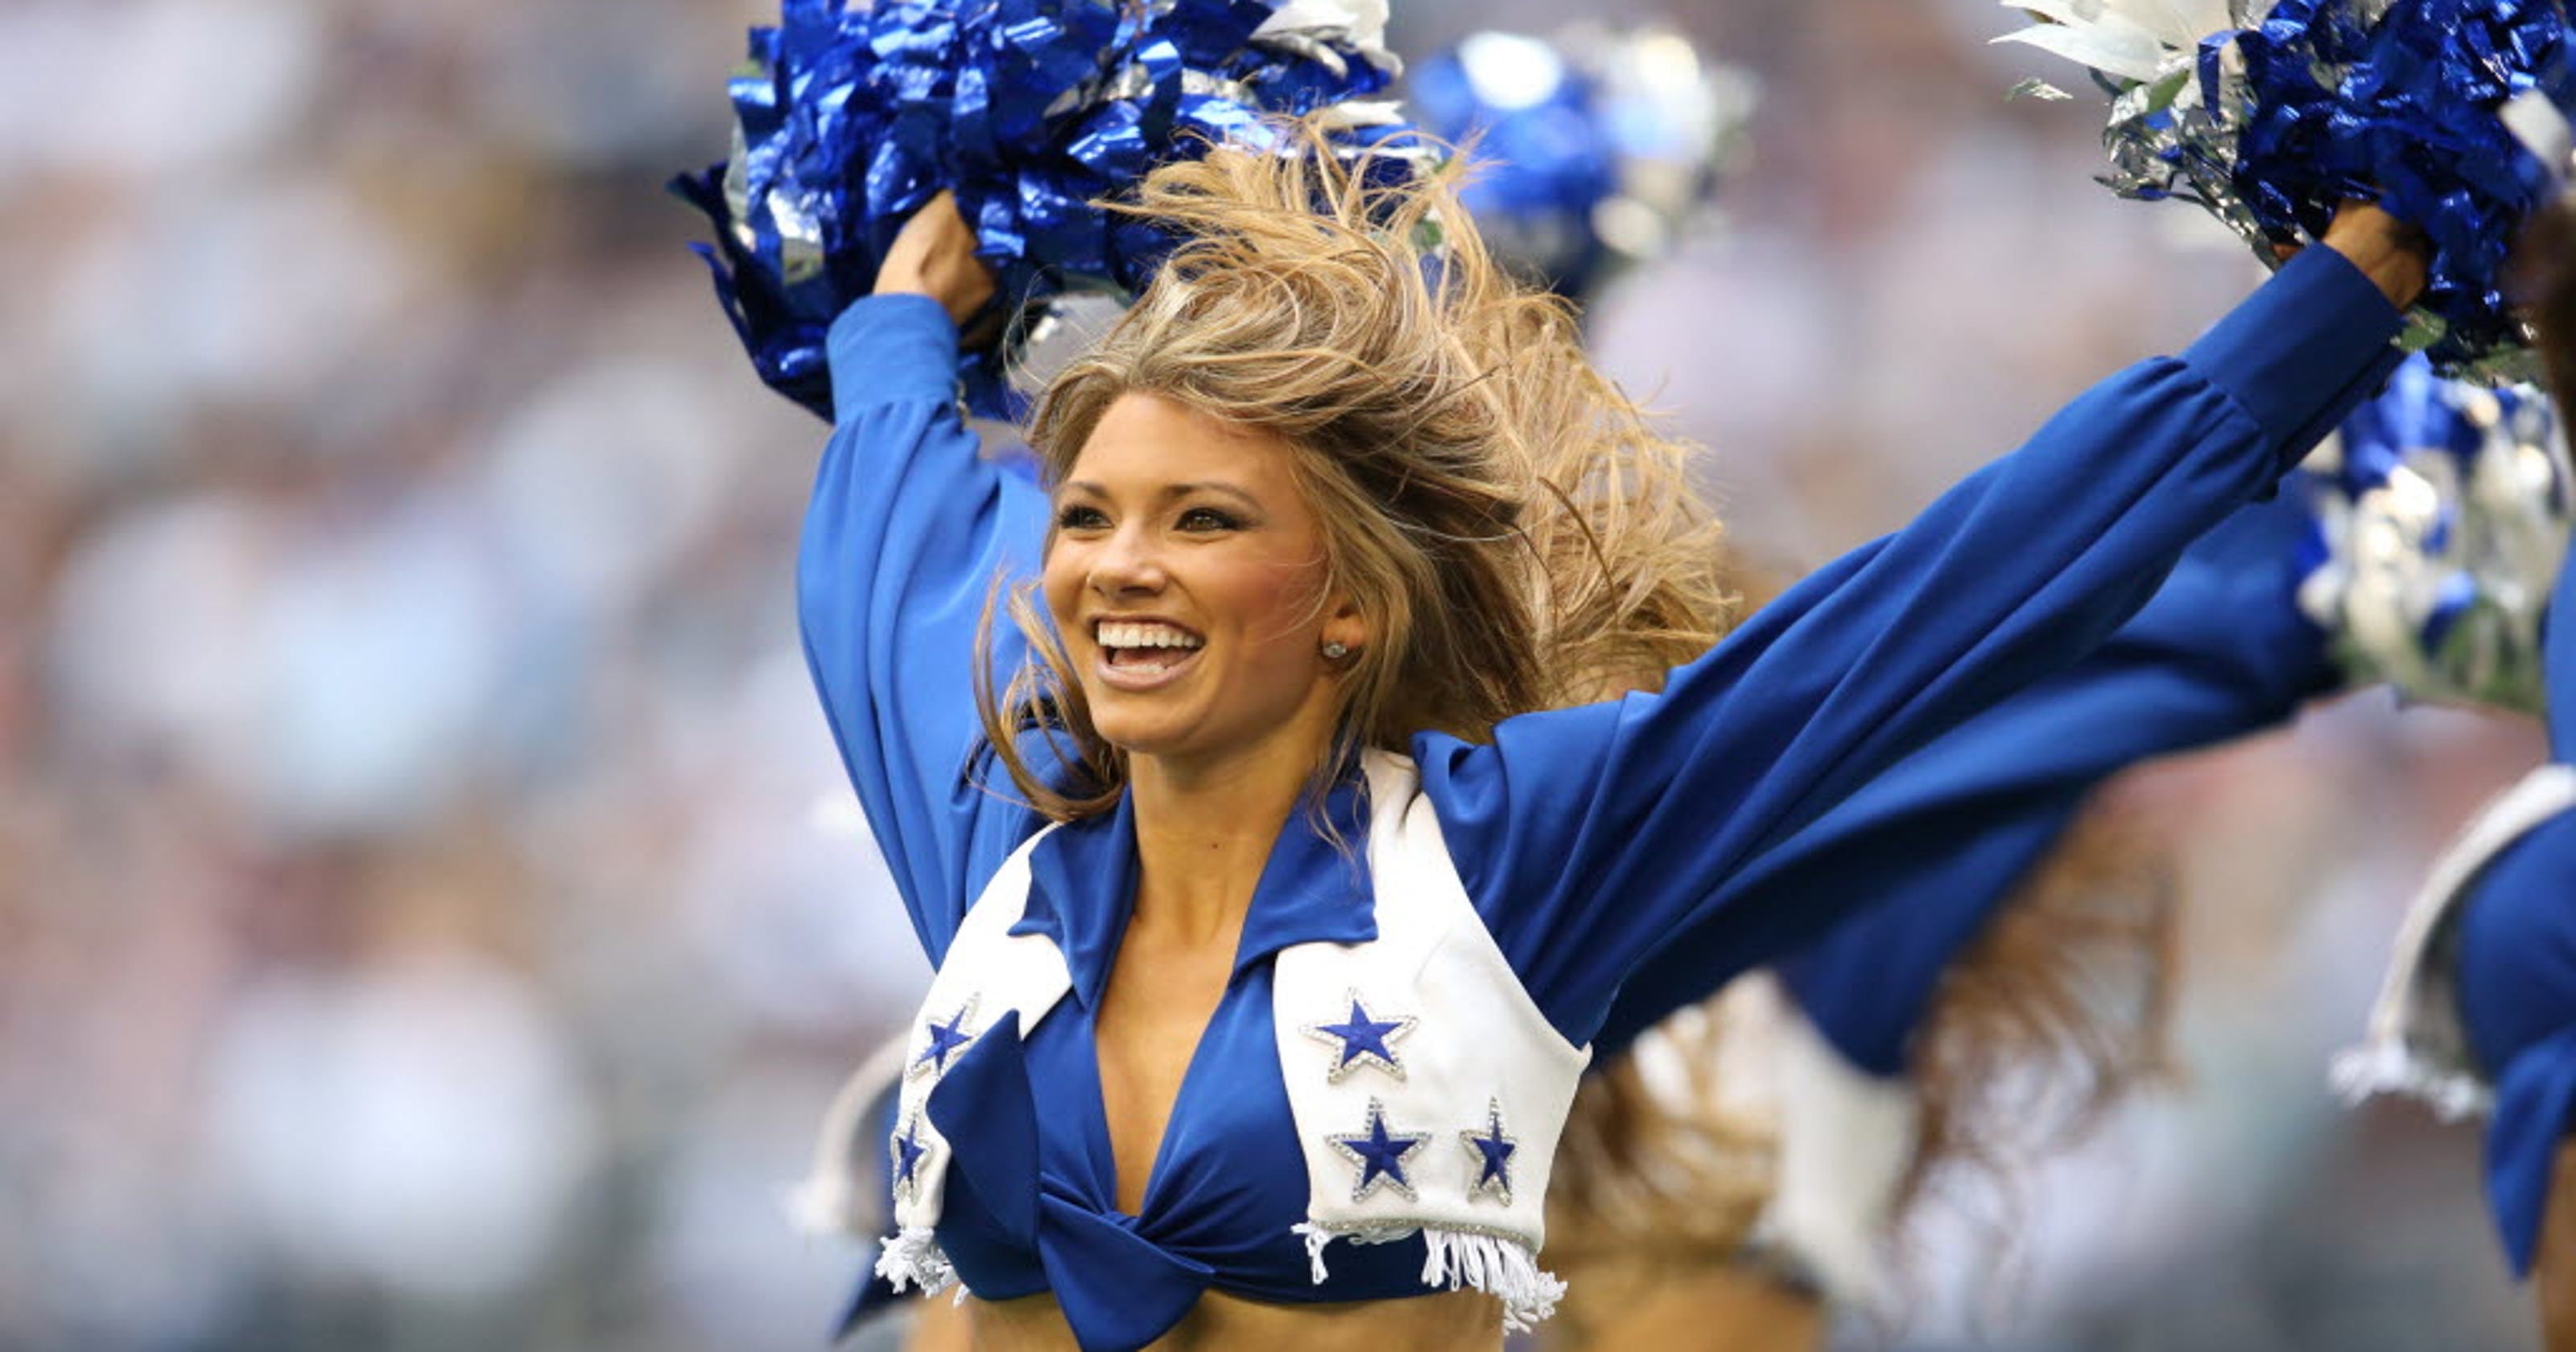 Dallas Cowboys cheerleaders, players share city tips